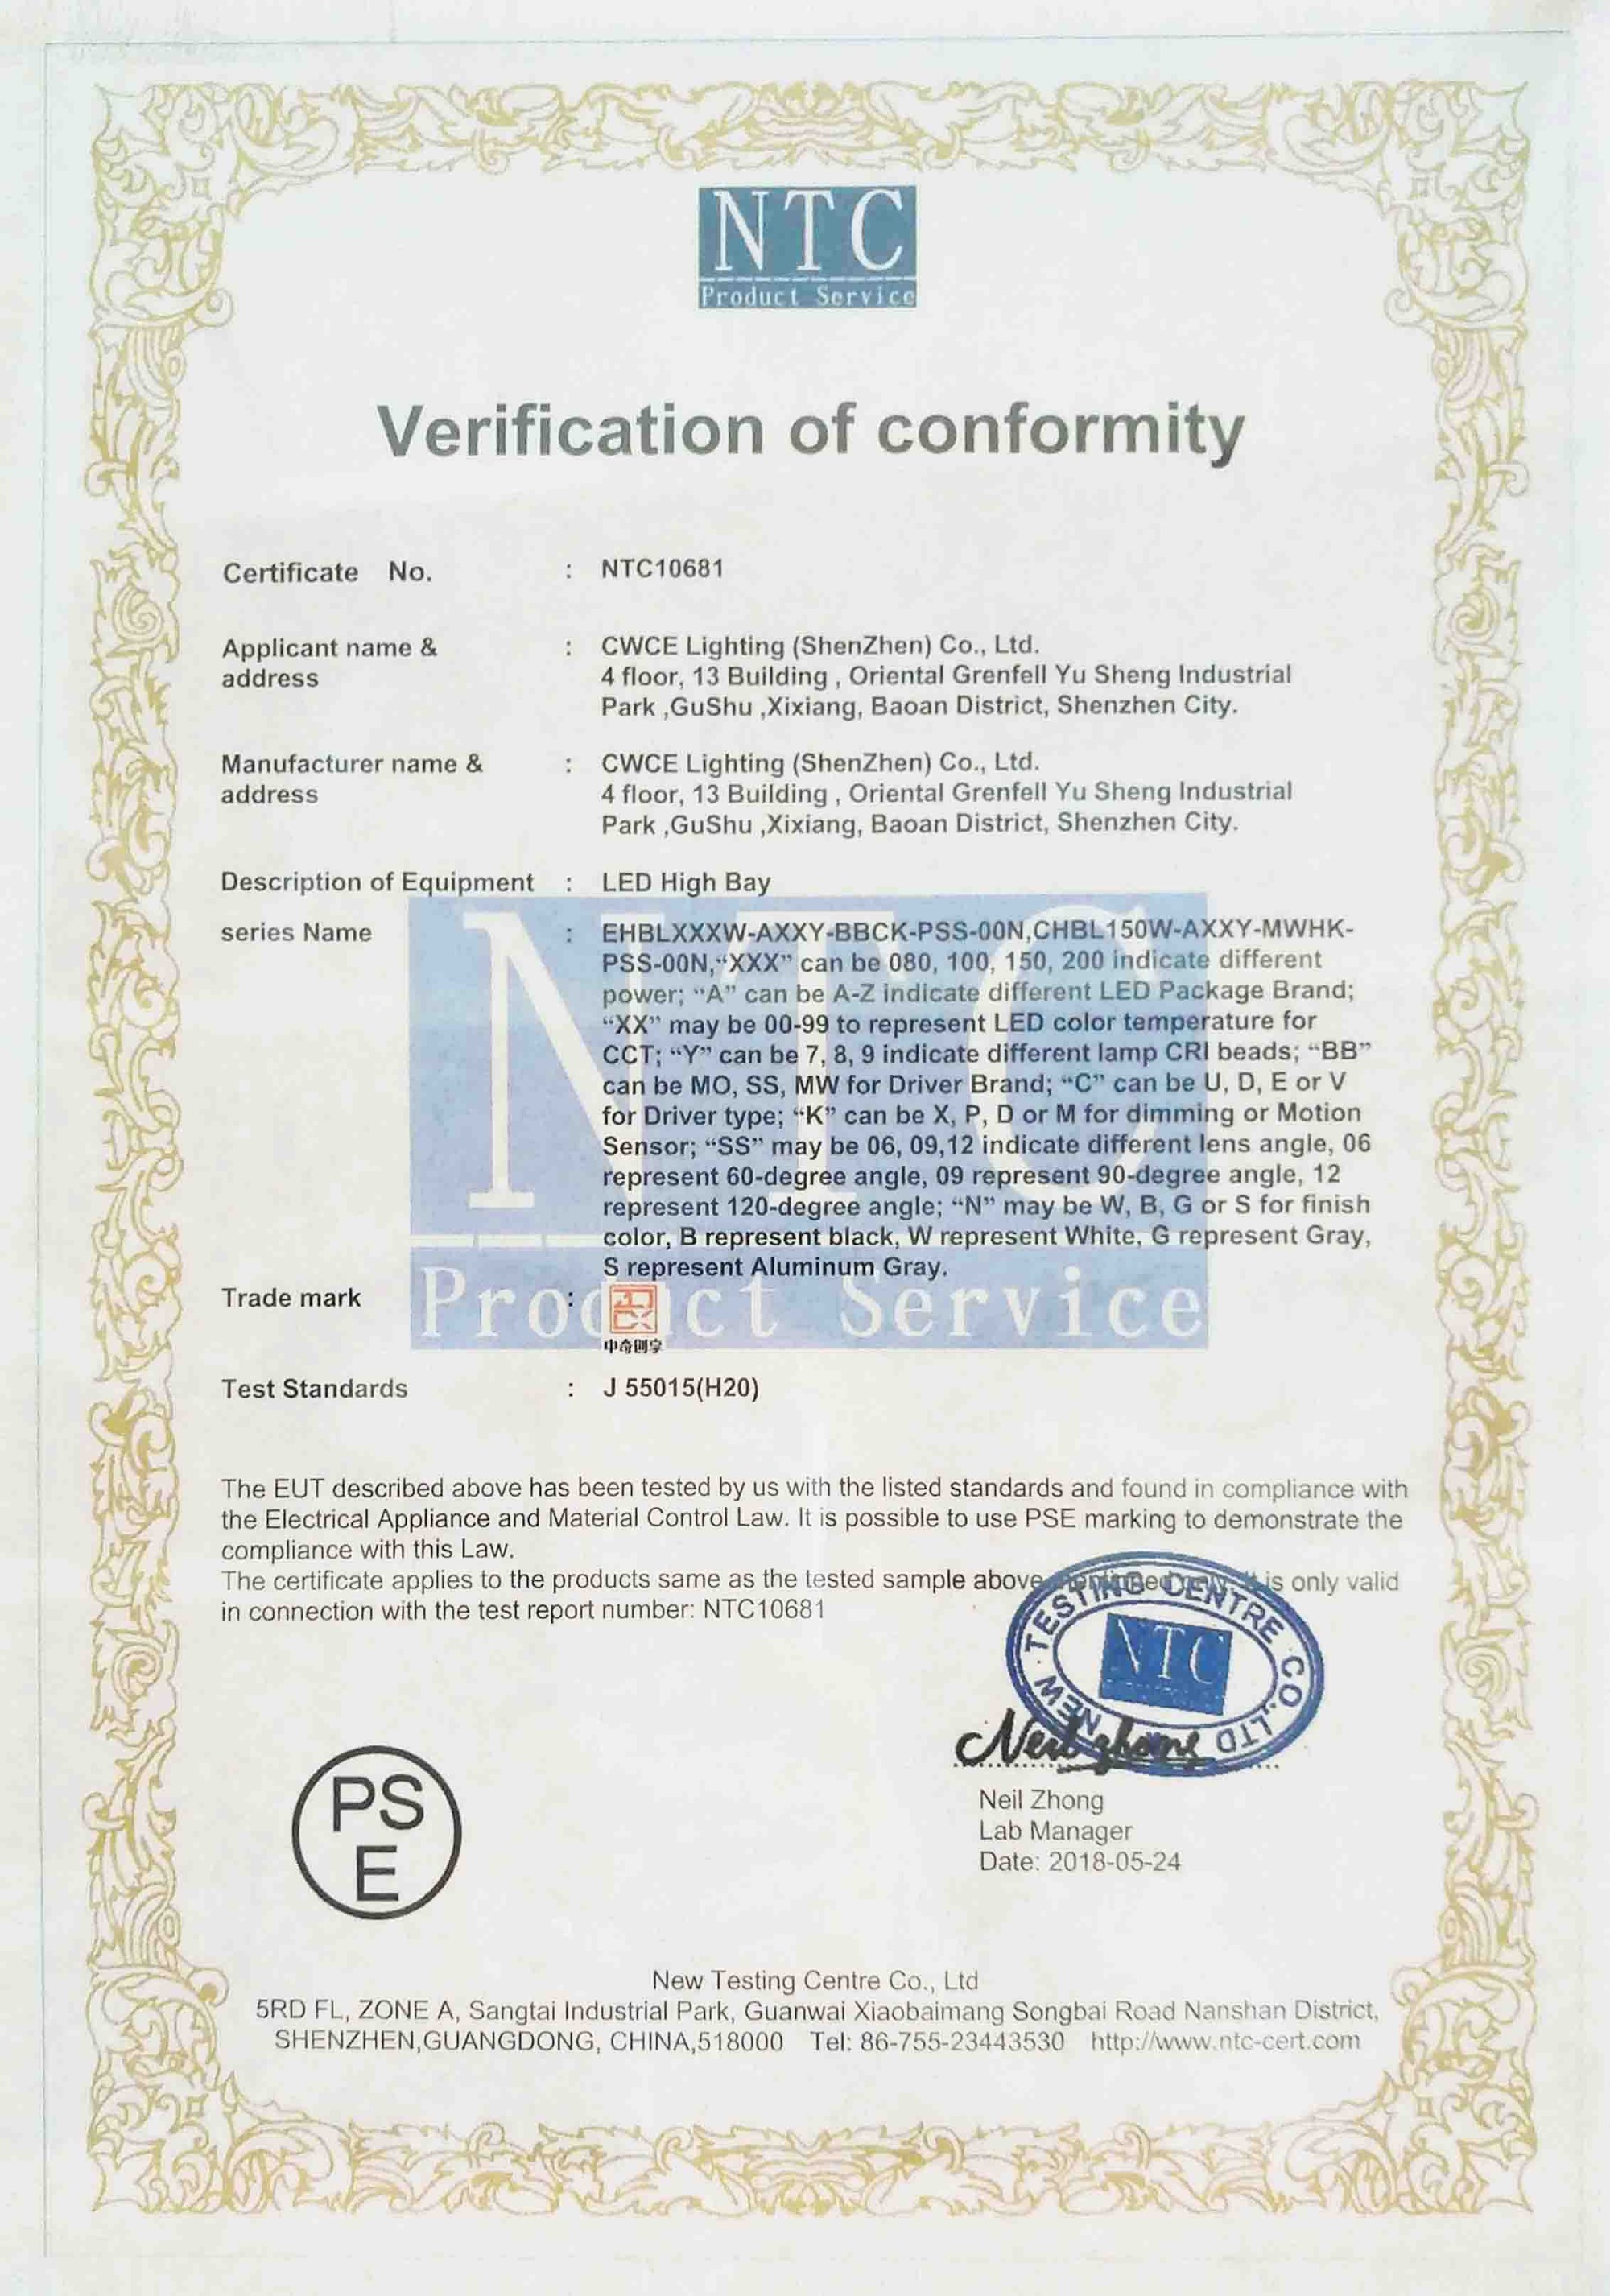 PSE2 Certificate by NTC